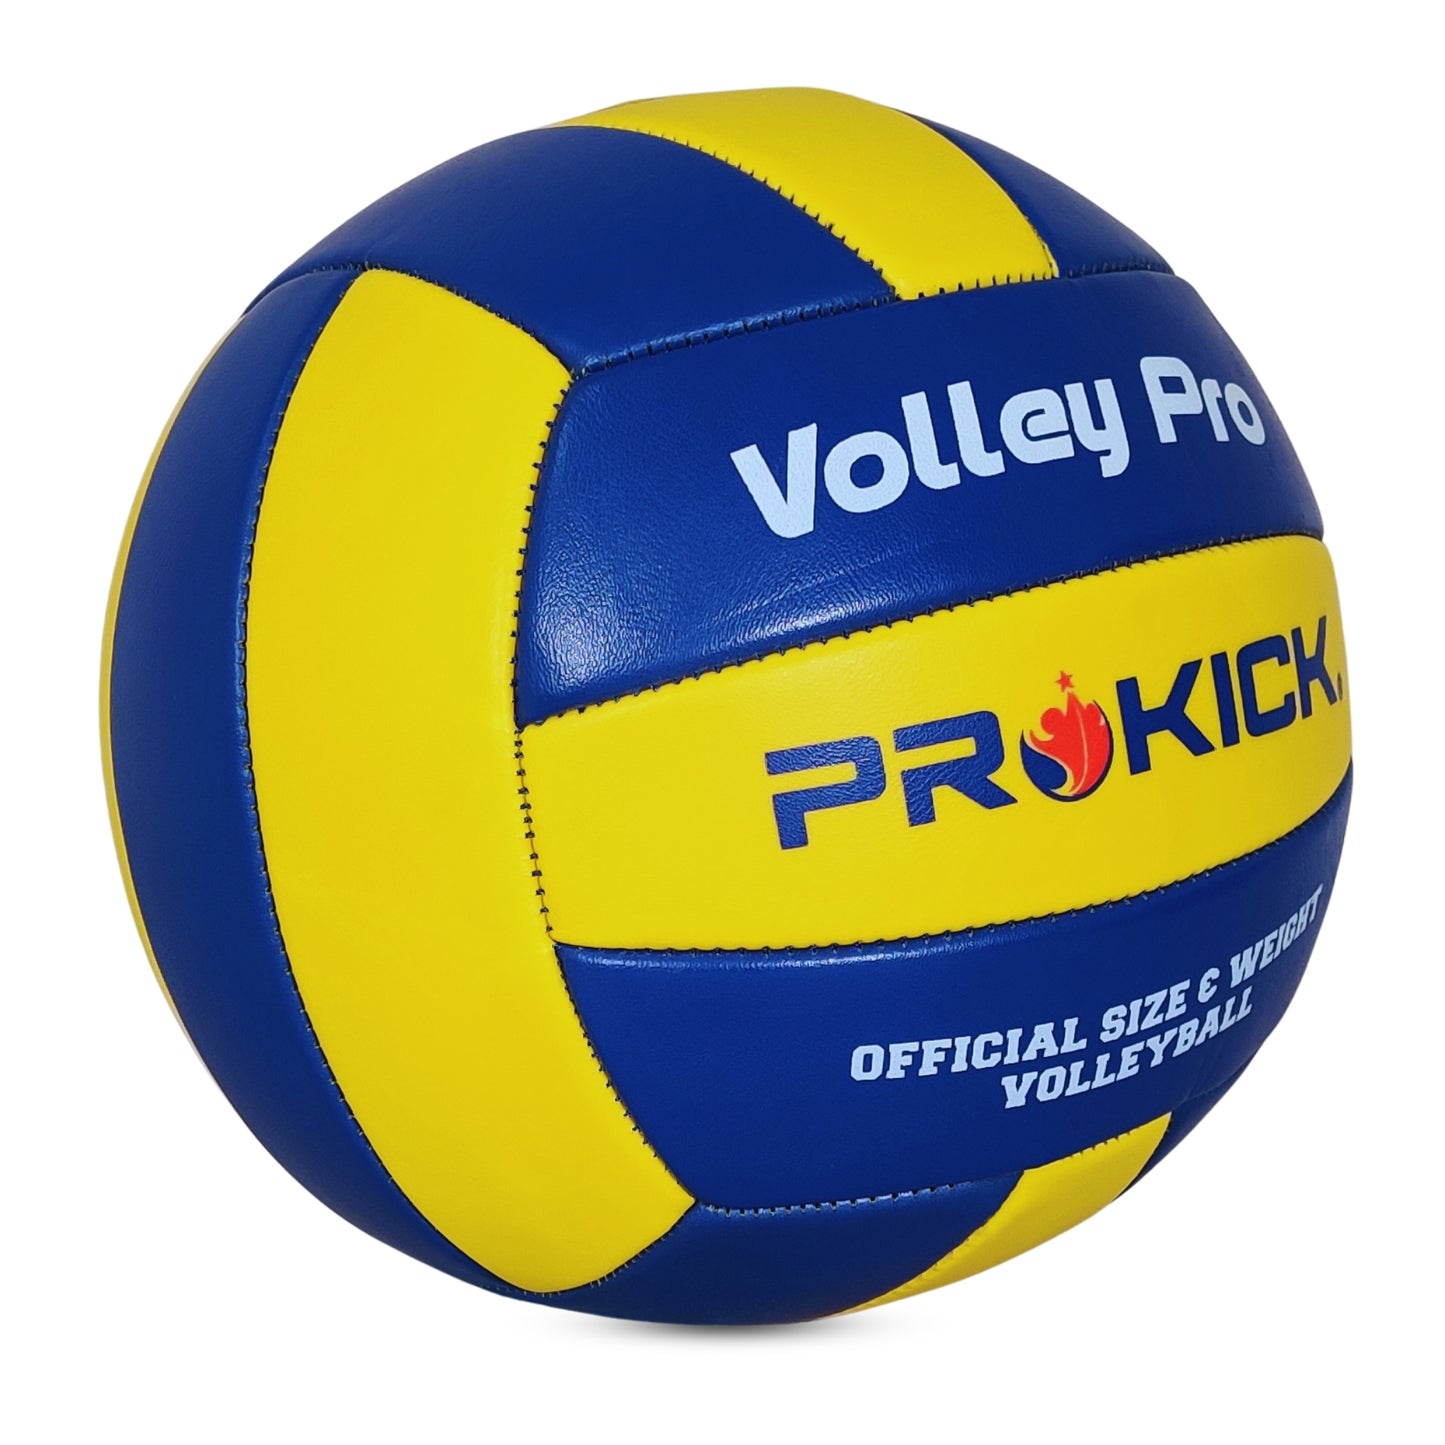 Prokick Volley Pro Machine Stitched 18-P Volleyball, Blue/Yellow (Size 4) - Best Price online Prokicksports.com